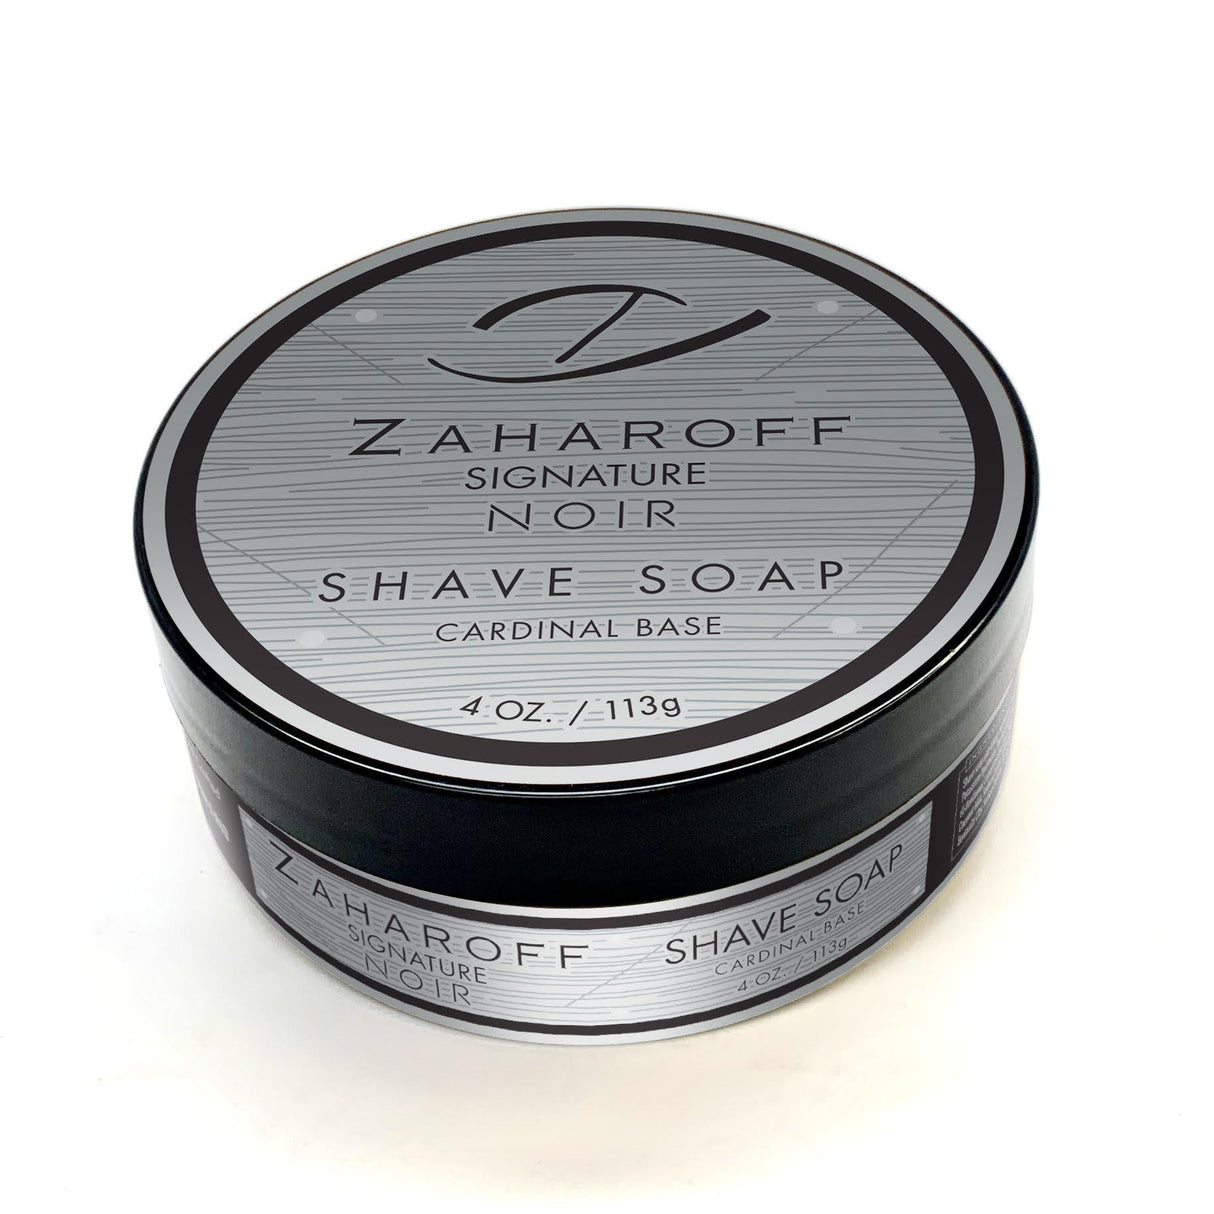 Gentleman's Nod - Zaharoff Signature NOIR Shave Soap